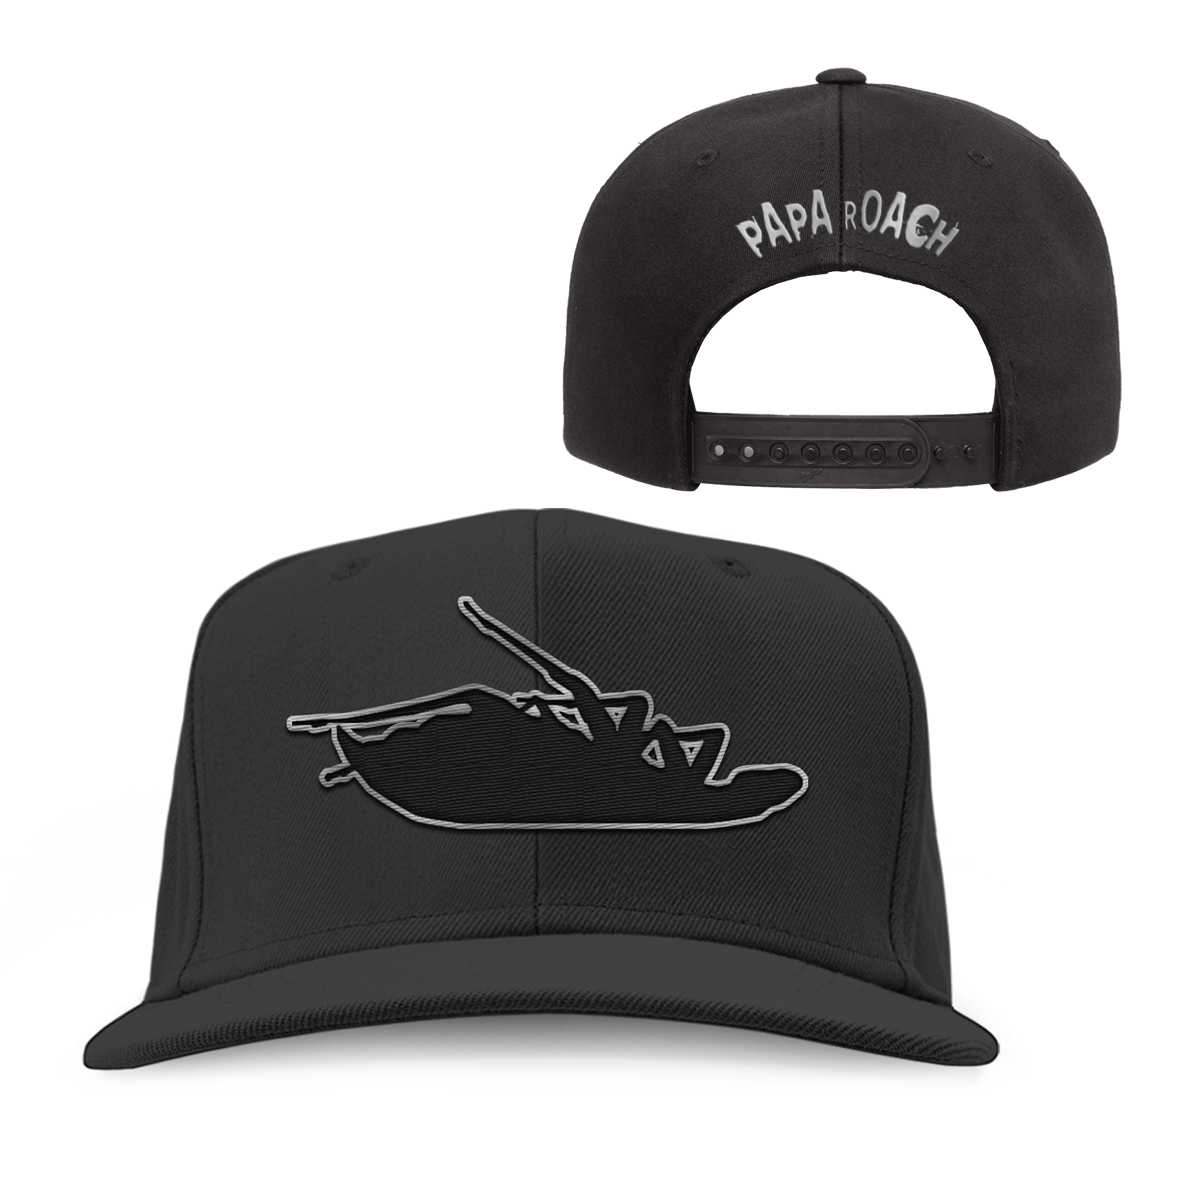 Classic Roach Silver Blackout Snapback Hat (Black)